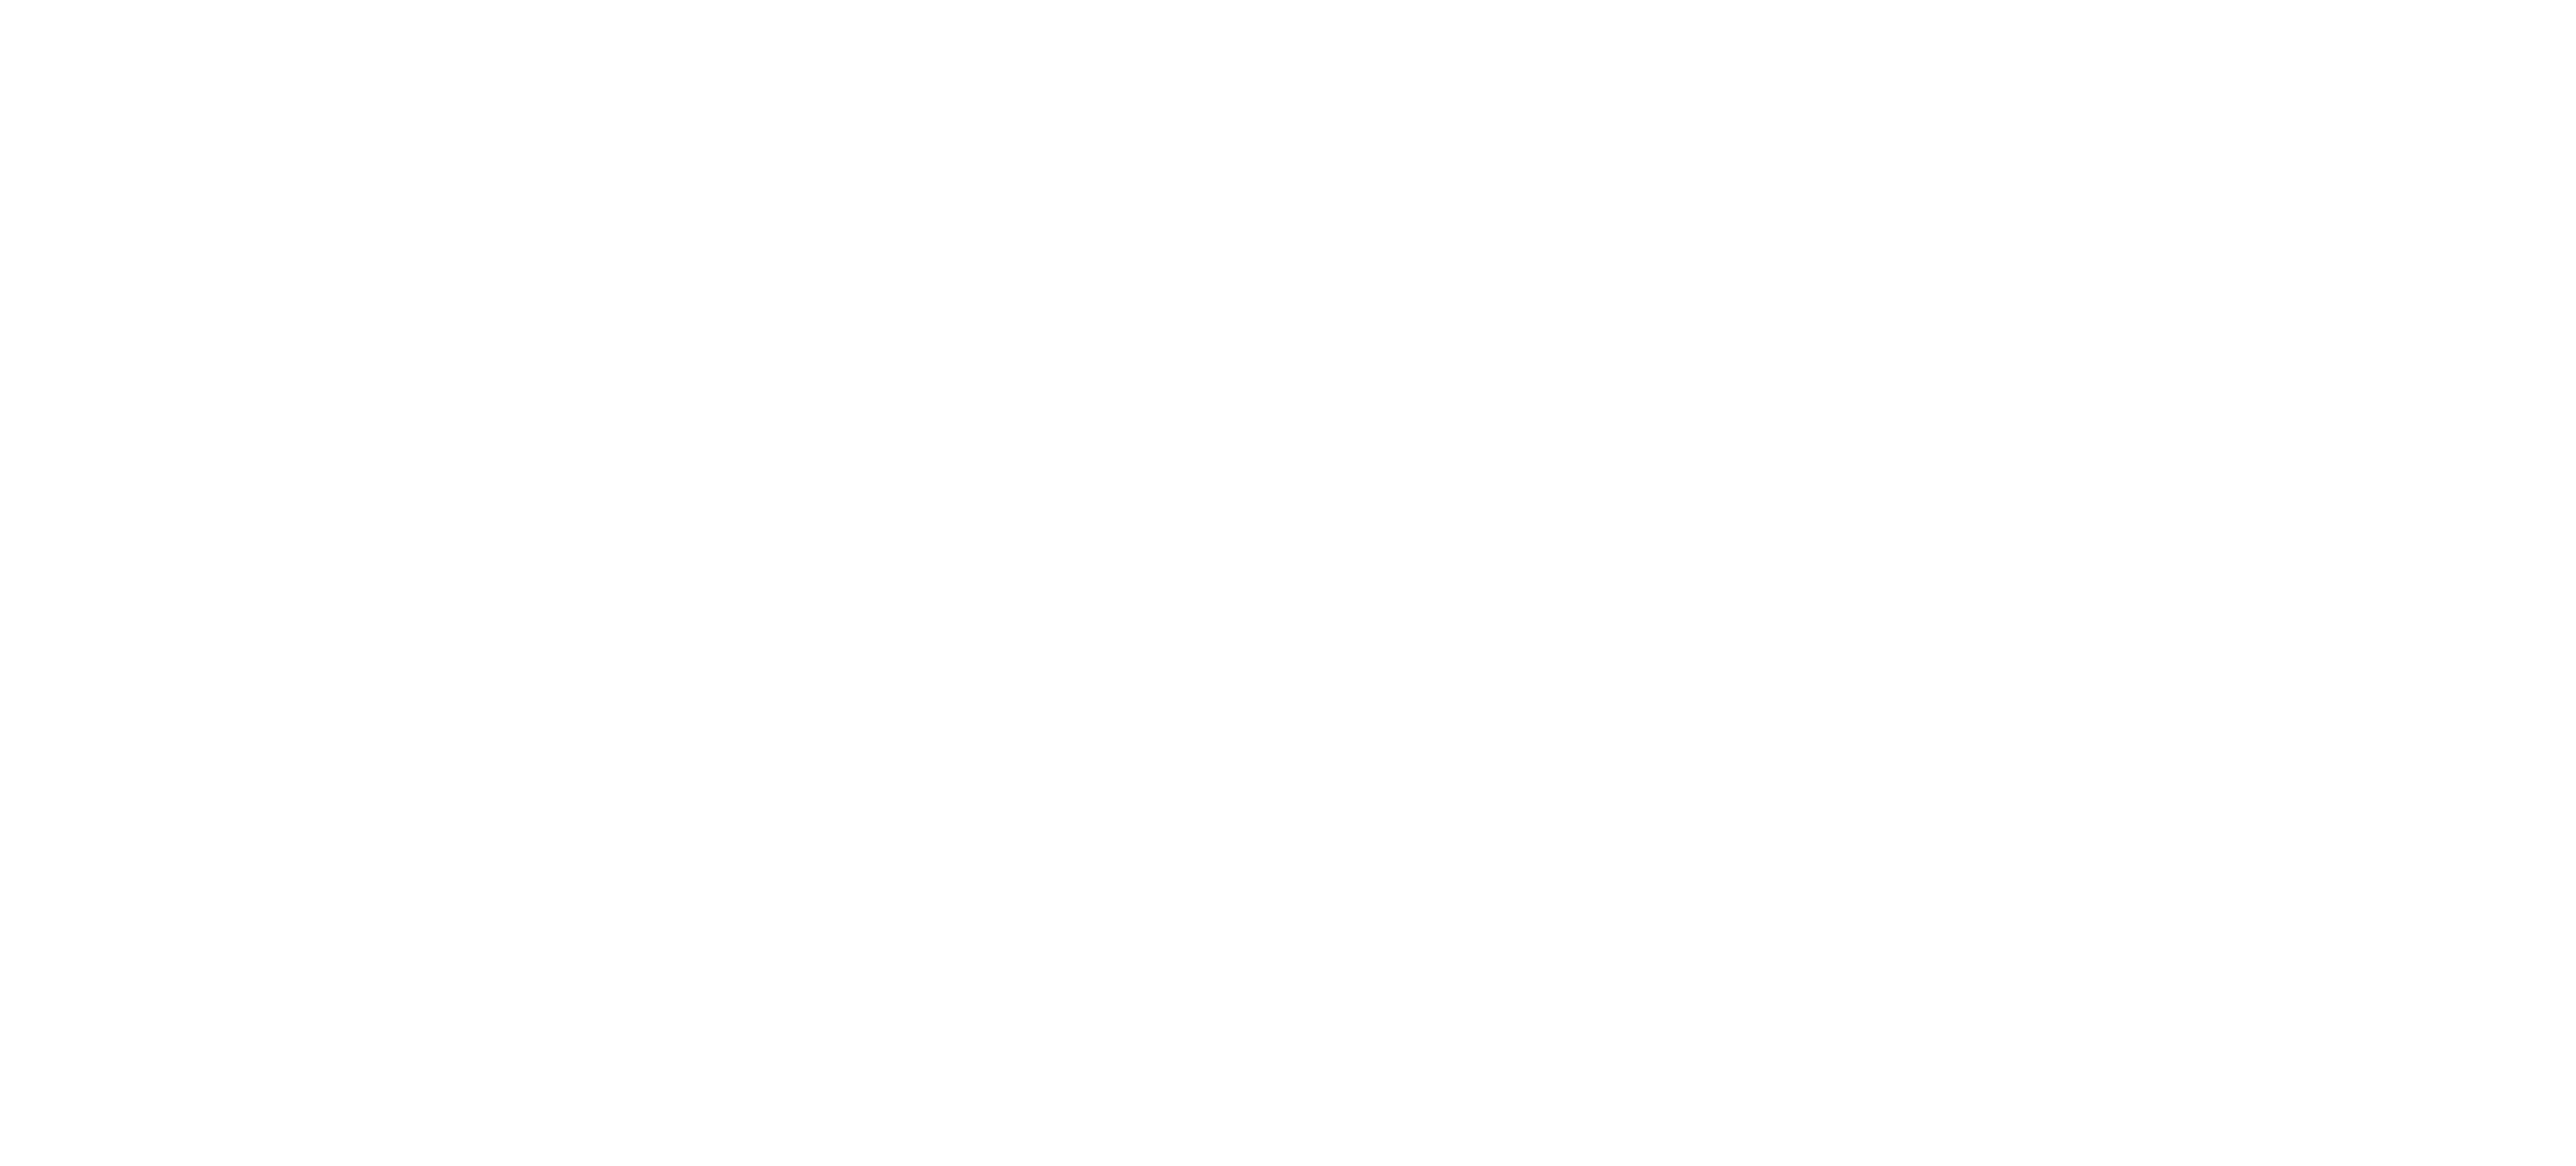 Saint Elizabeth University – Mahoney Library Catalog